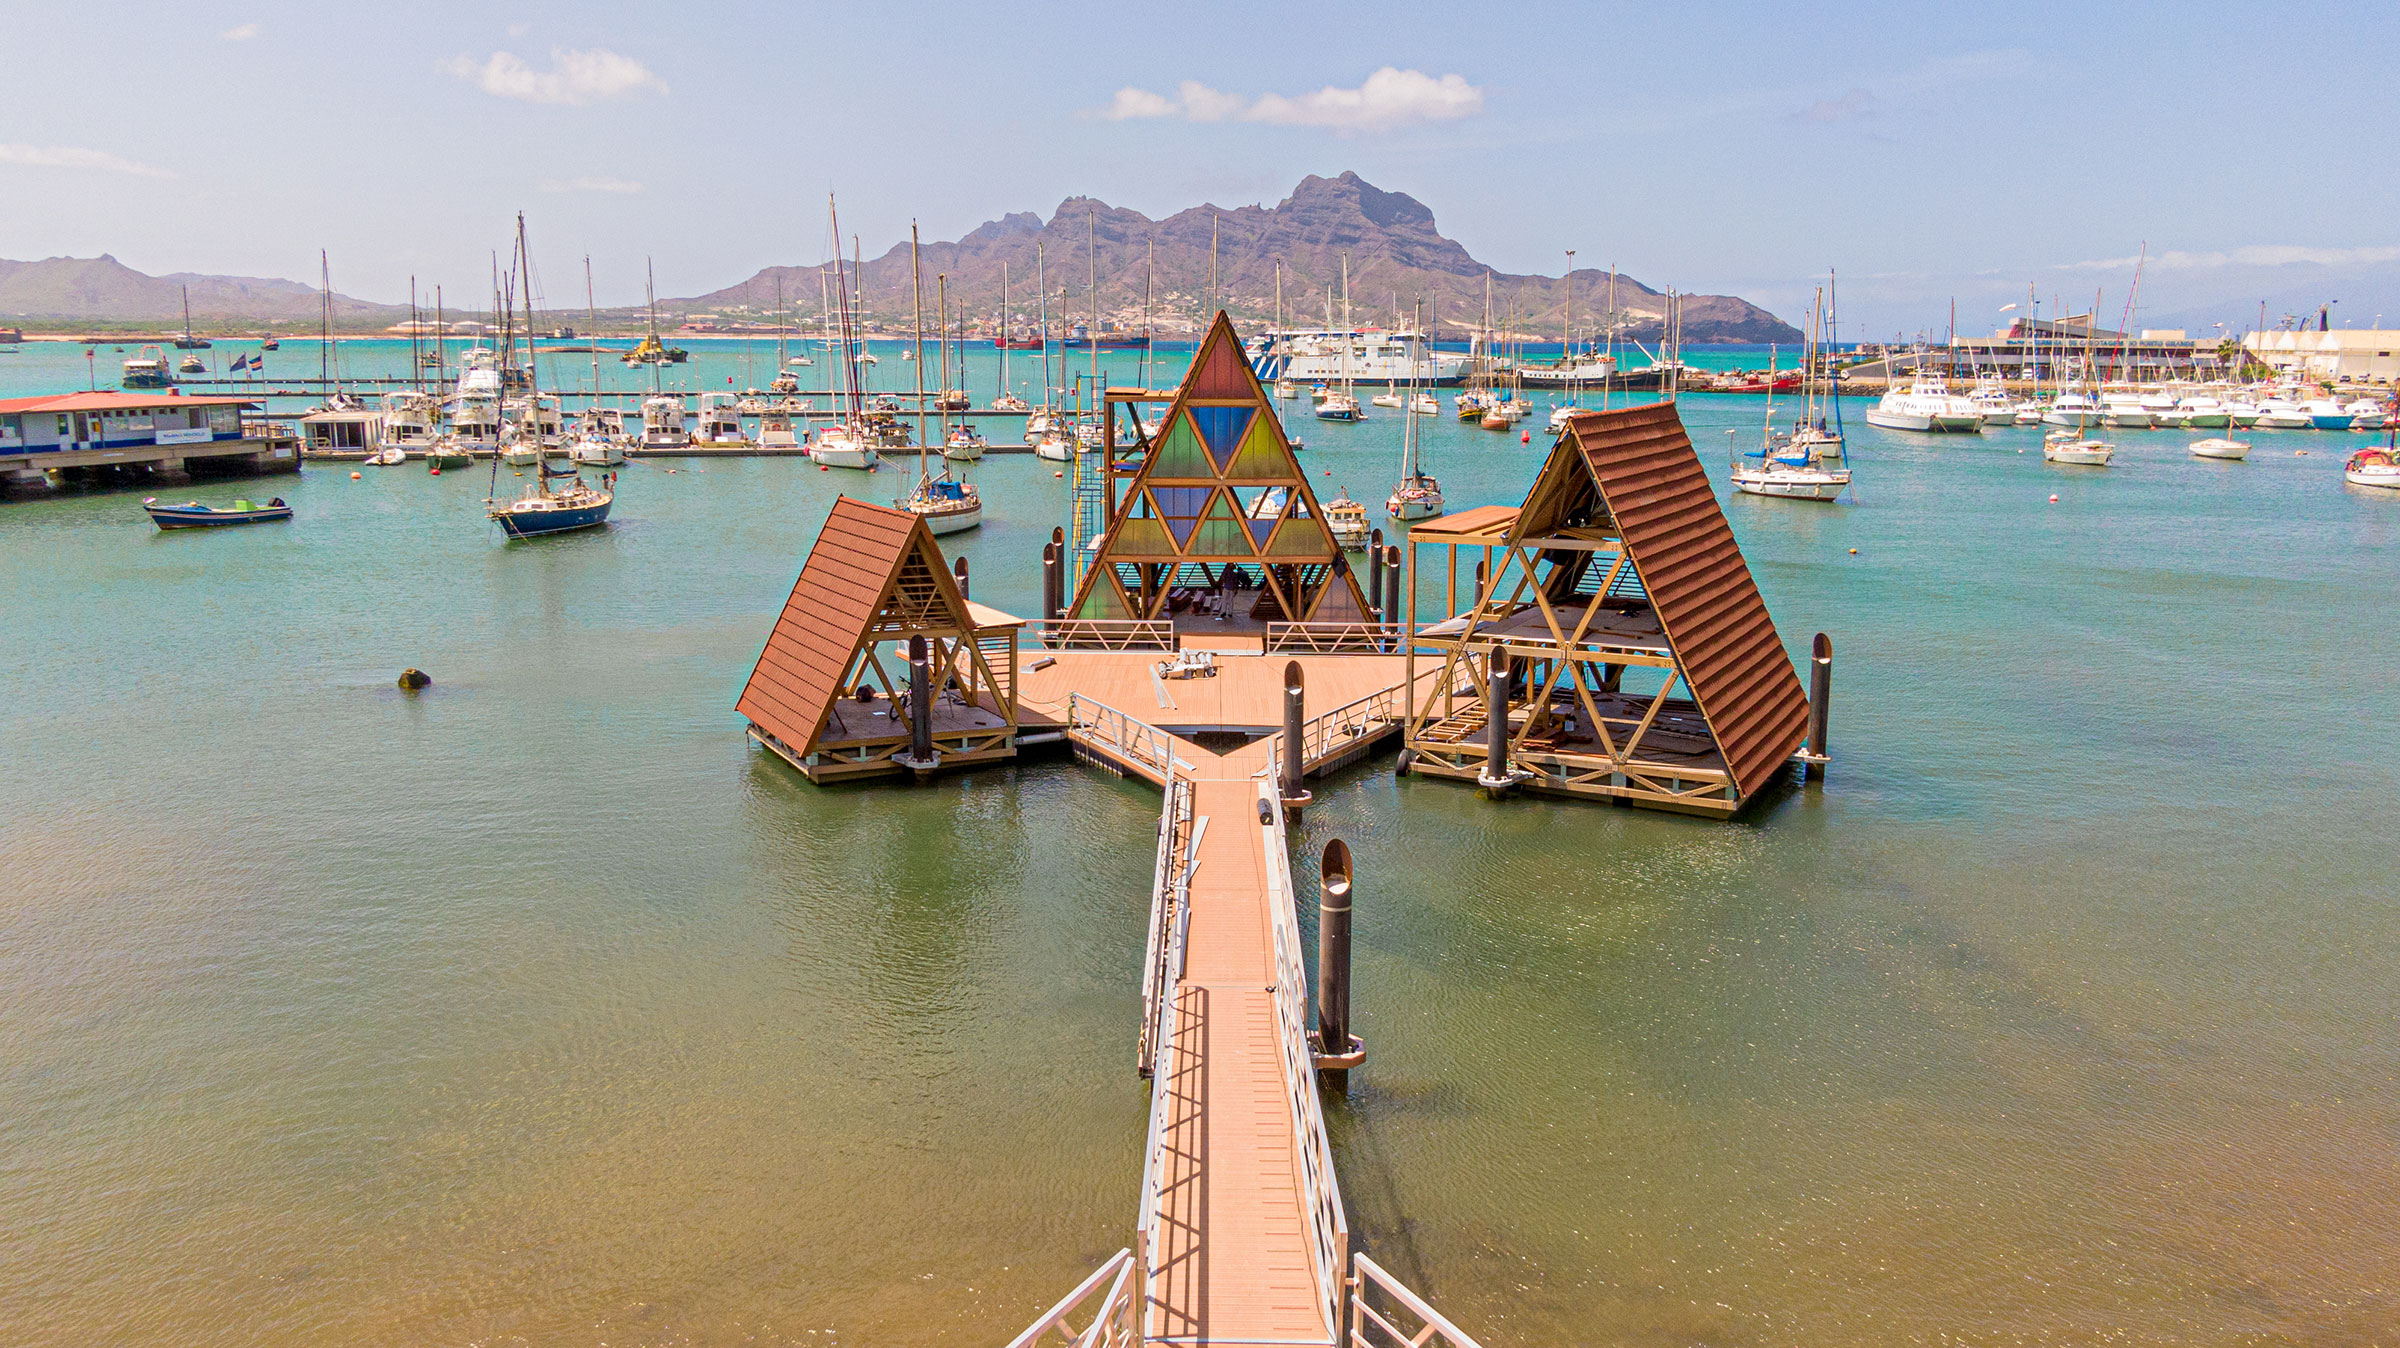 afkom Vejrtrækning kombination São Vicente, Cape Verde Is One of the World's Greatest Places | TIME